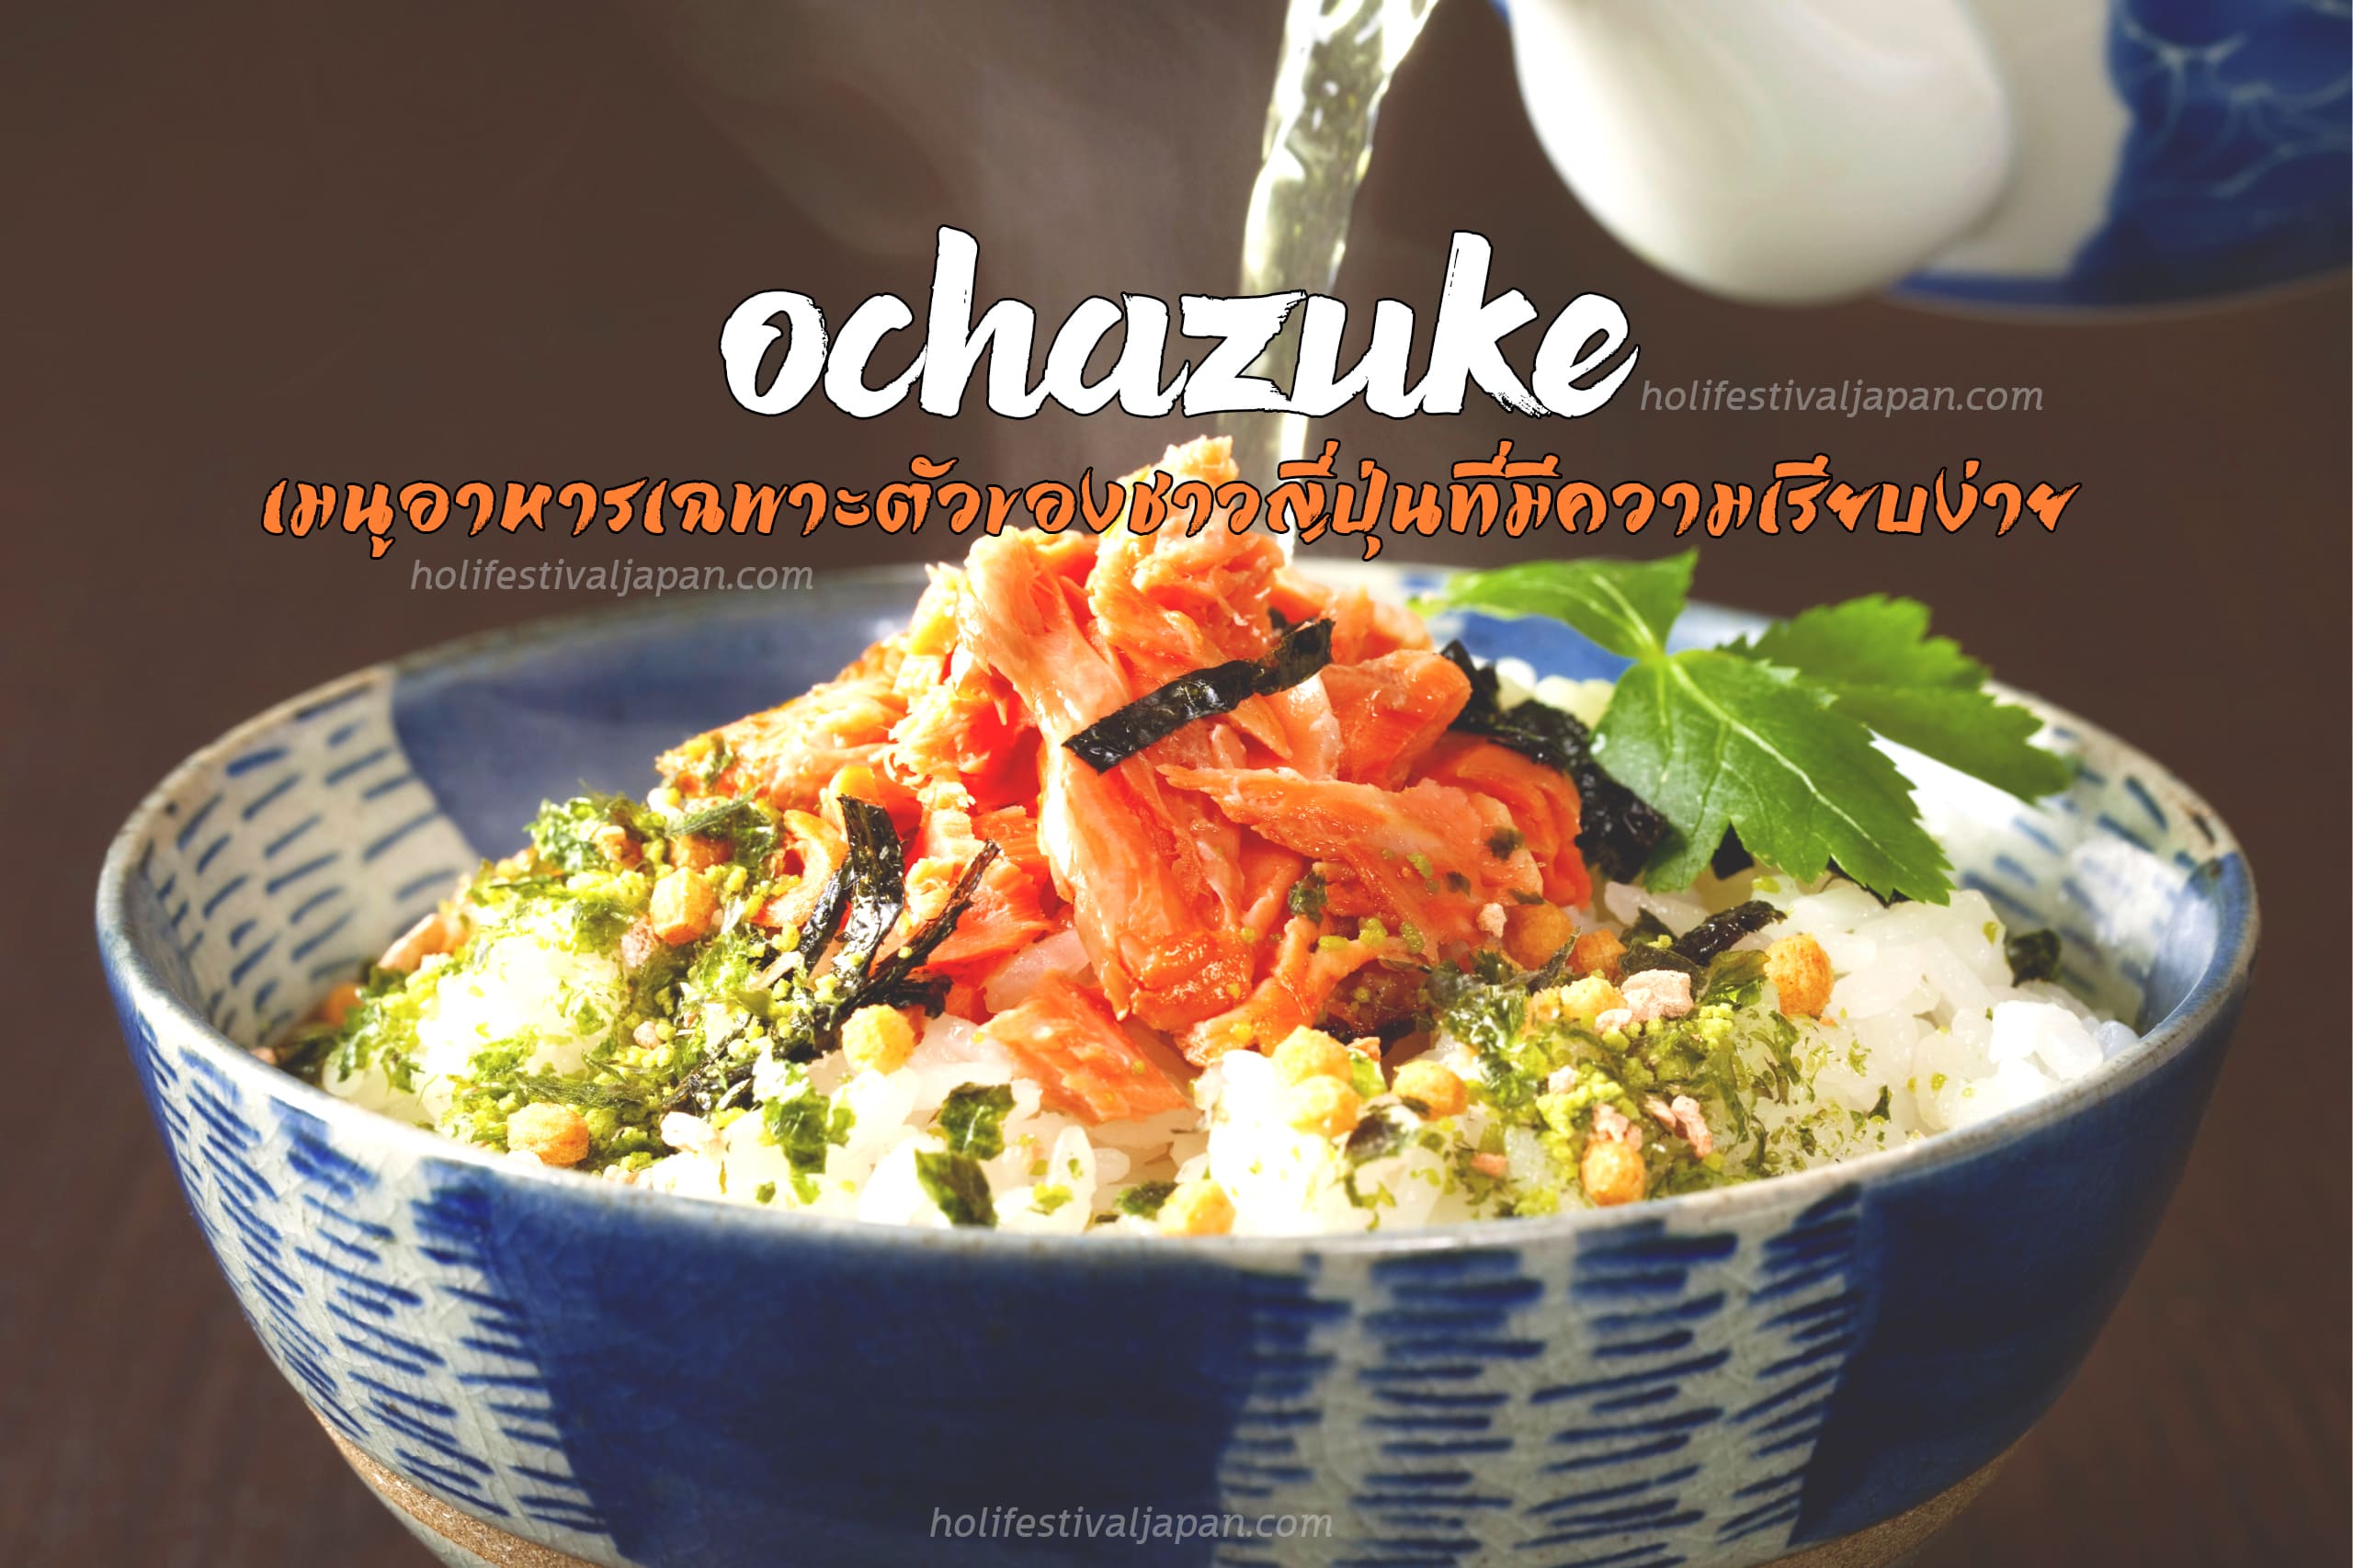 Ochazuke เมนูอาหารเฉพาะตัวชาวญี่ปุ่นที่มีความเรียบง่าย อร่อย แปลกใหม่